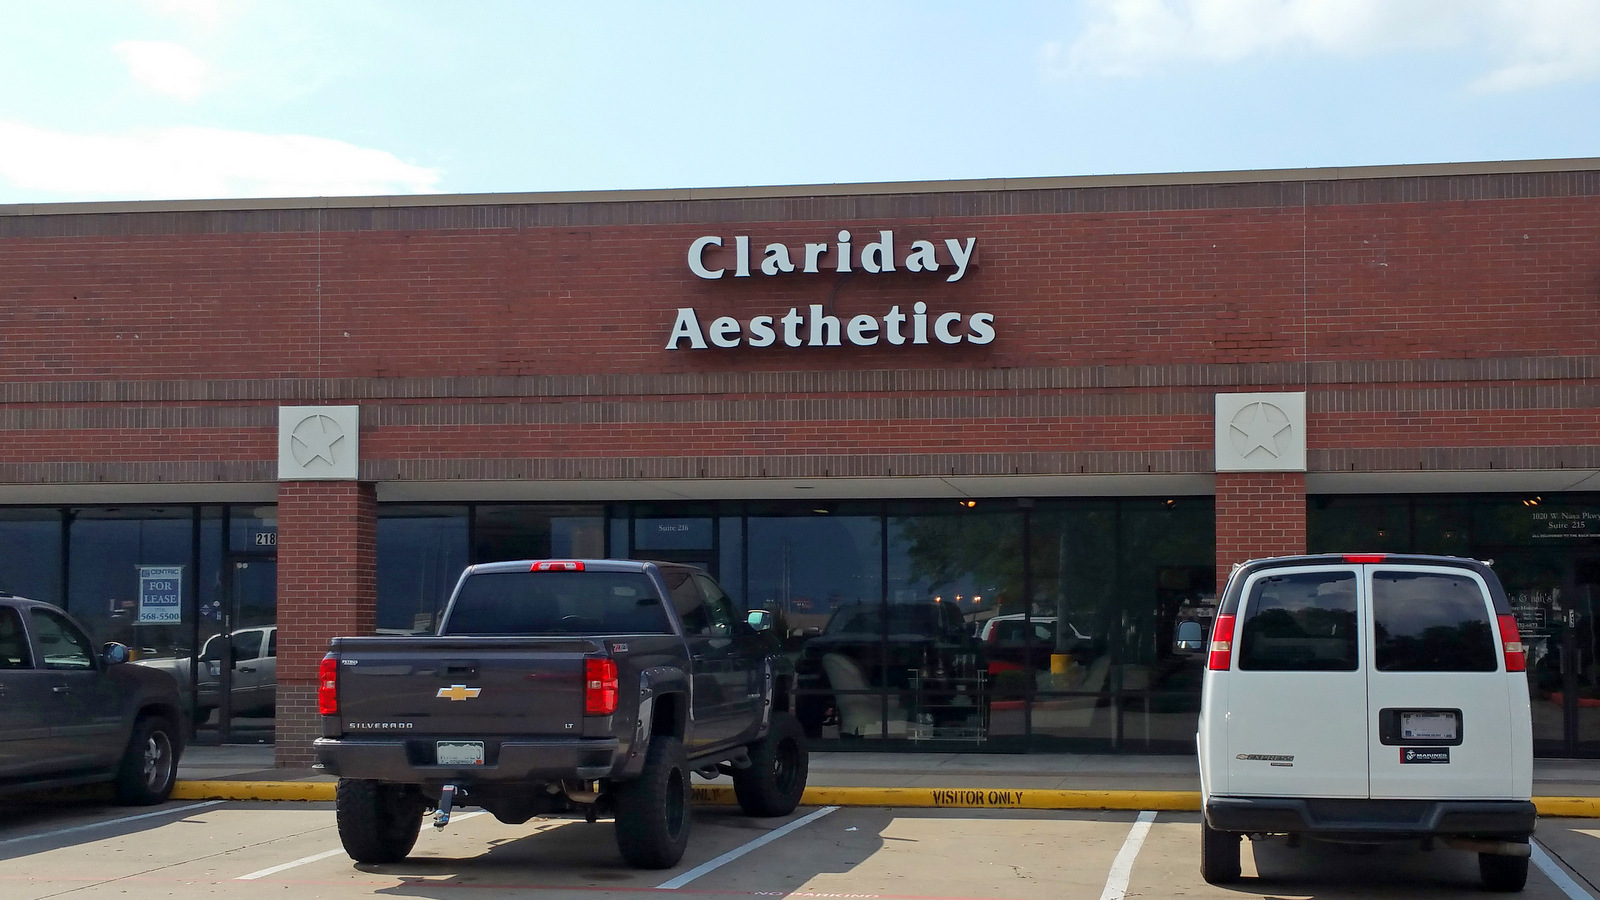 Clariday Aesthetics